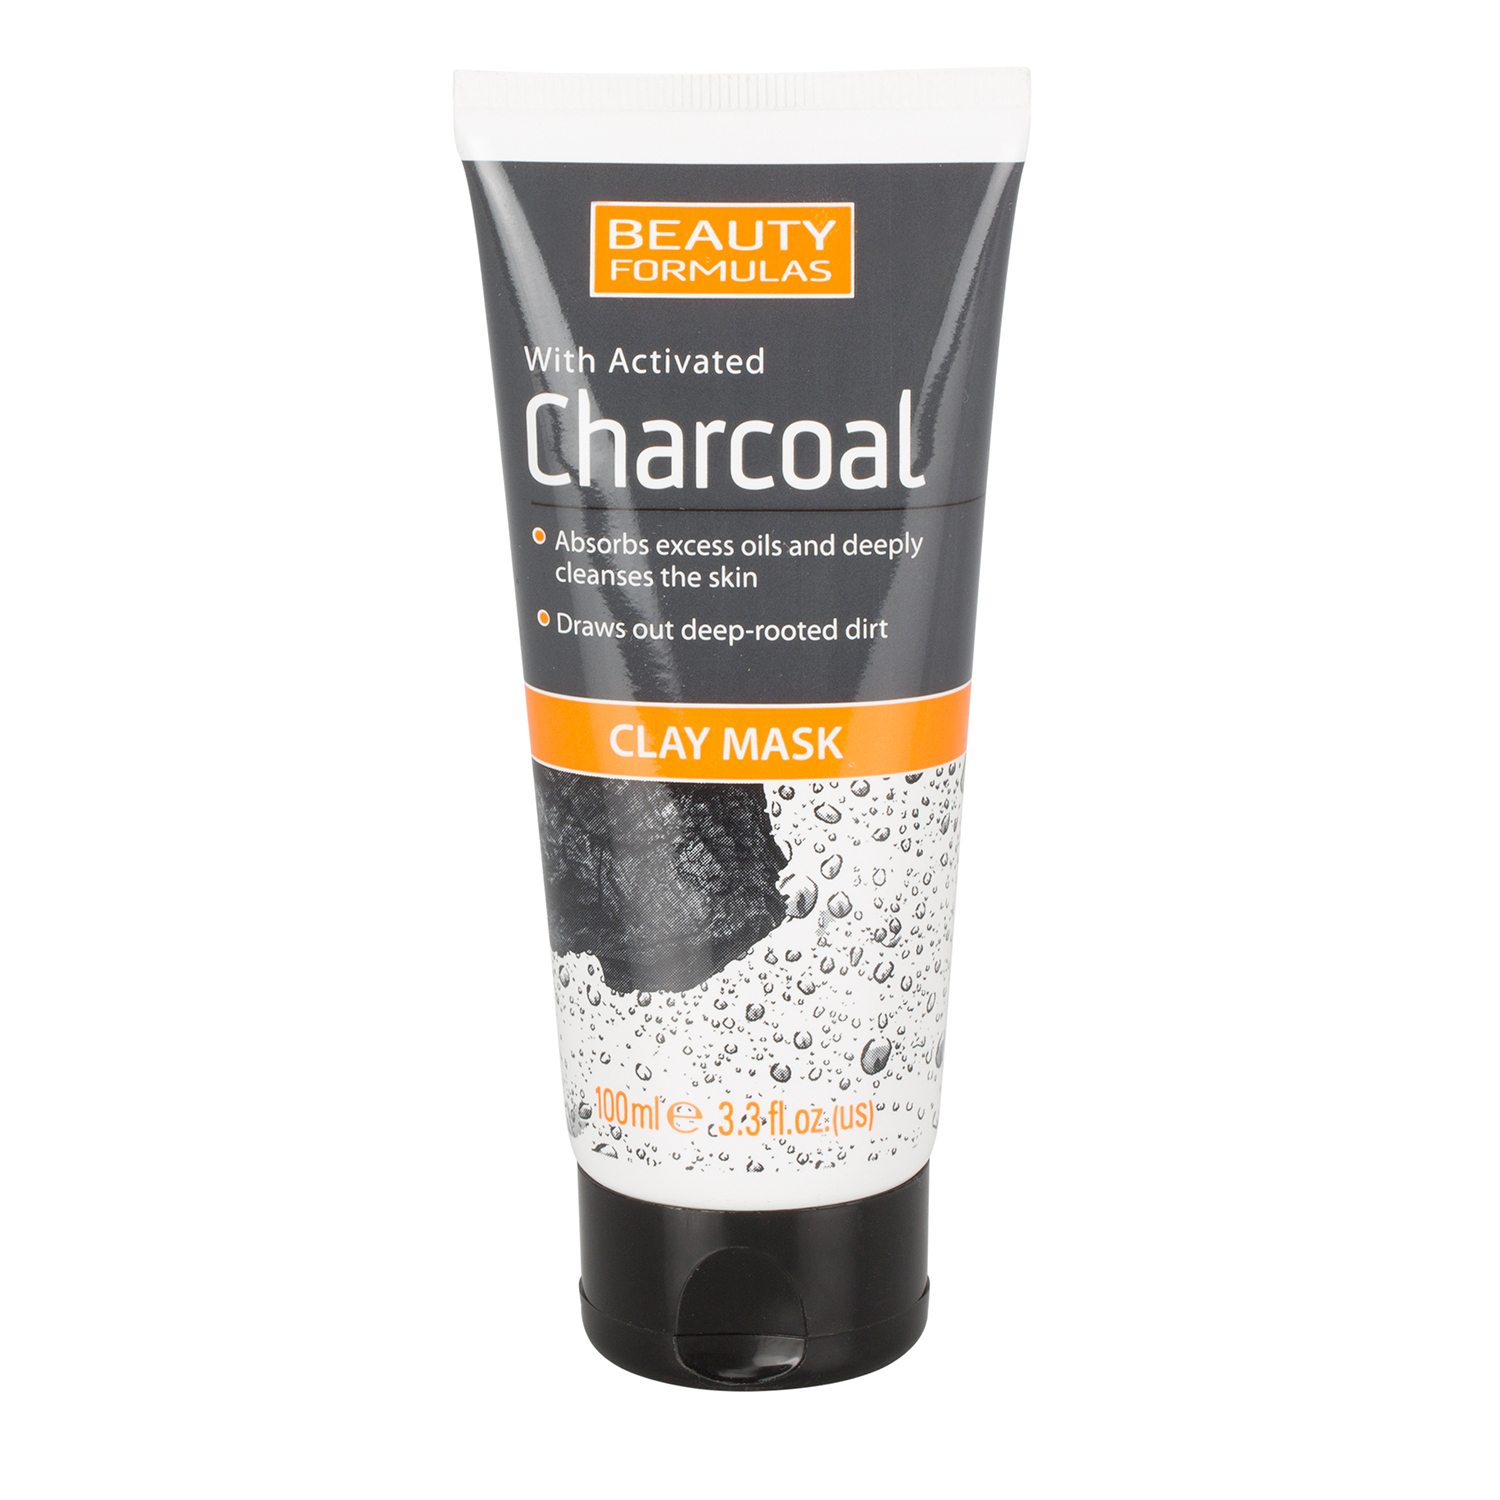 Beauty Formulas Charcoal Clay Mask Image